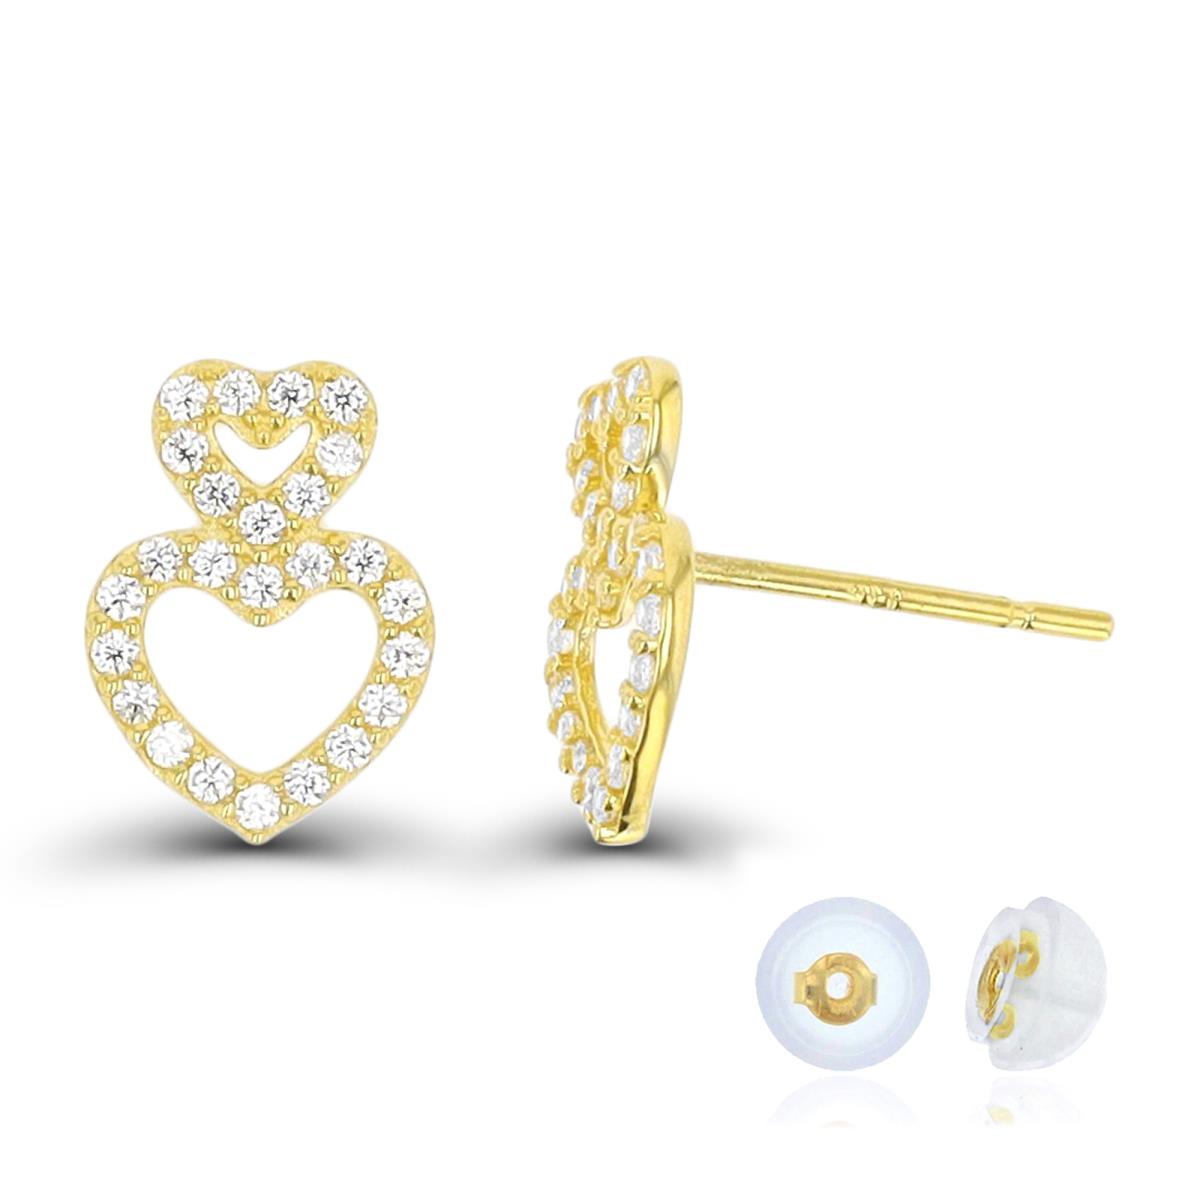 10K Yellow Gold Duo Hearts 9X7mm White CZ Stud Earring